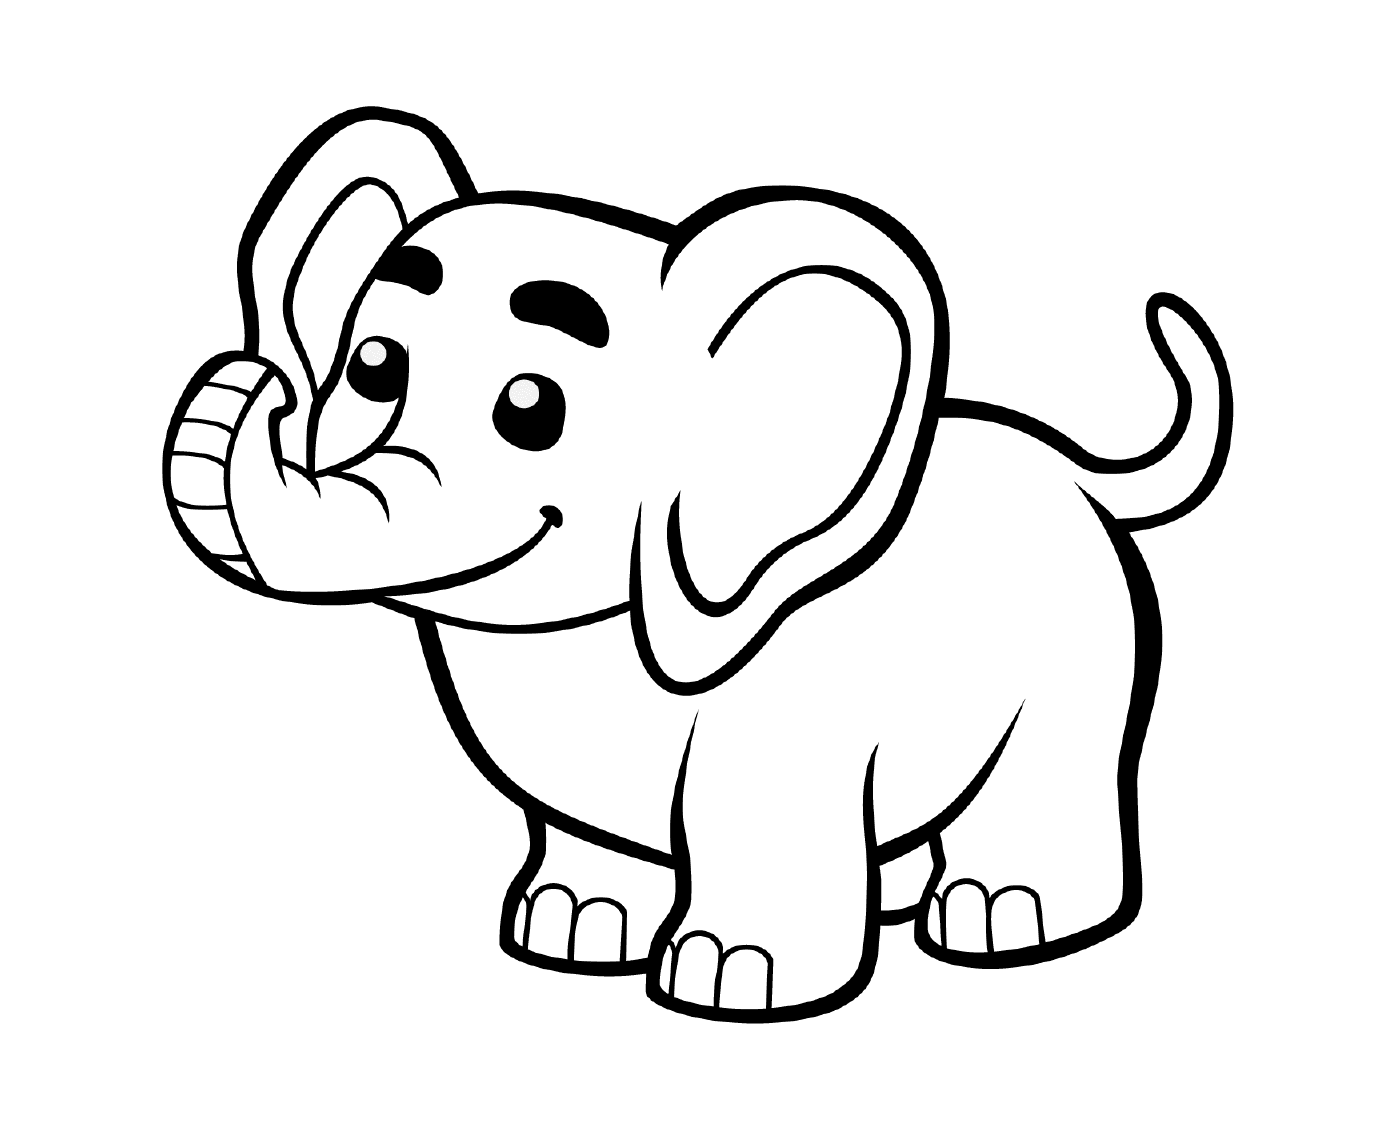  A standing elephant 